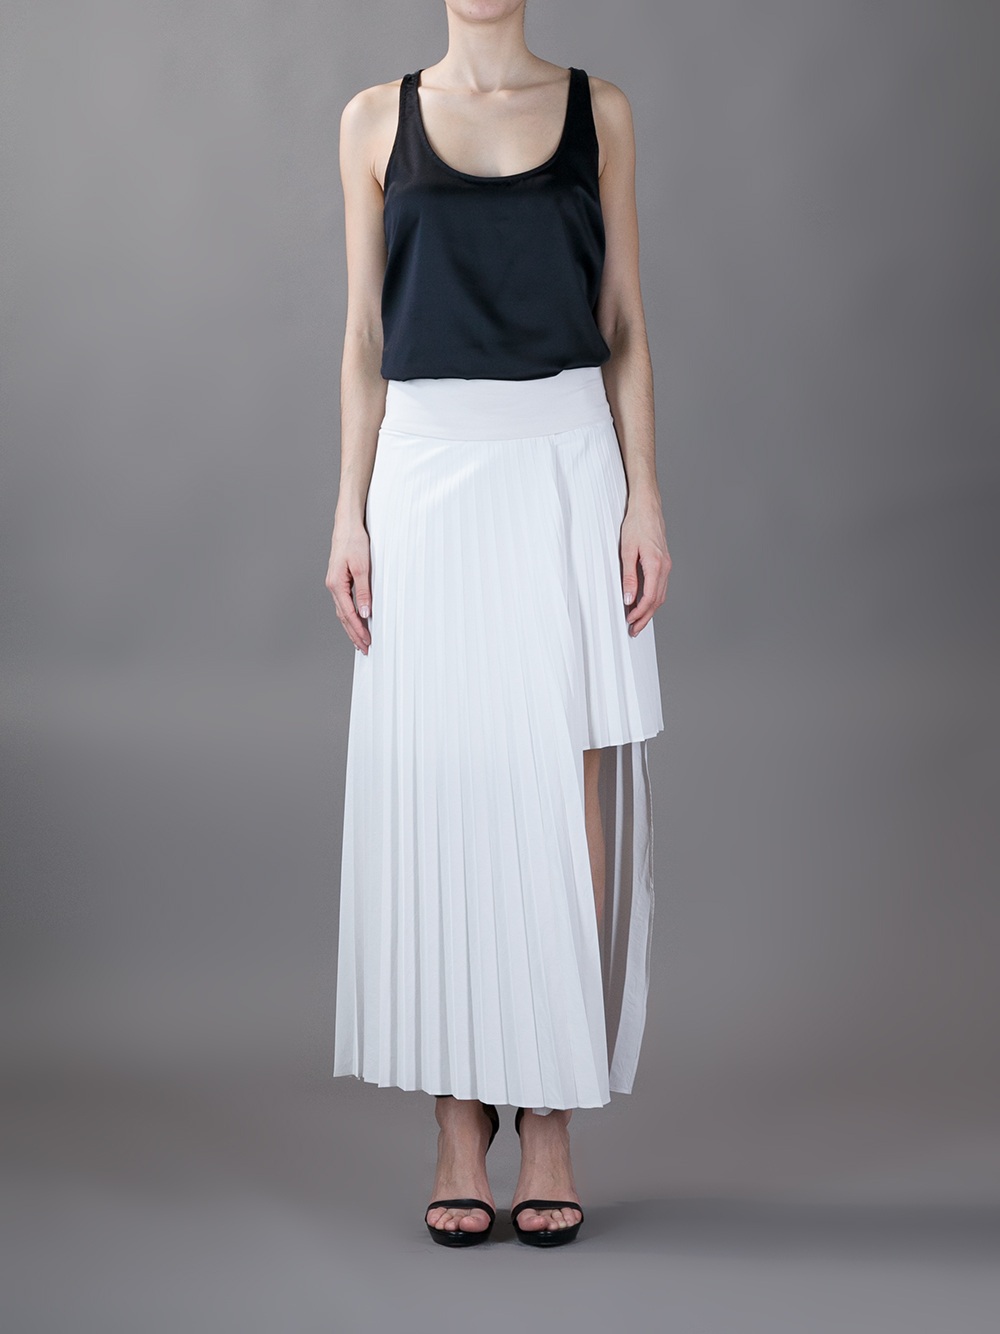 Brunello Cucinelli Pleated Maxi Skirt in White - Lyst